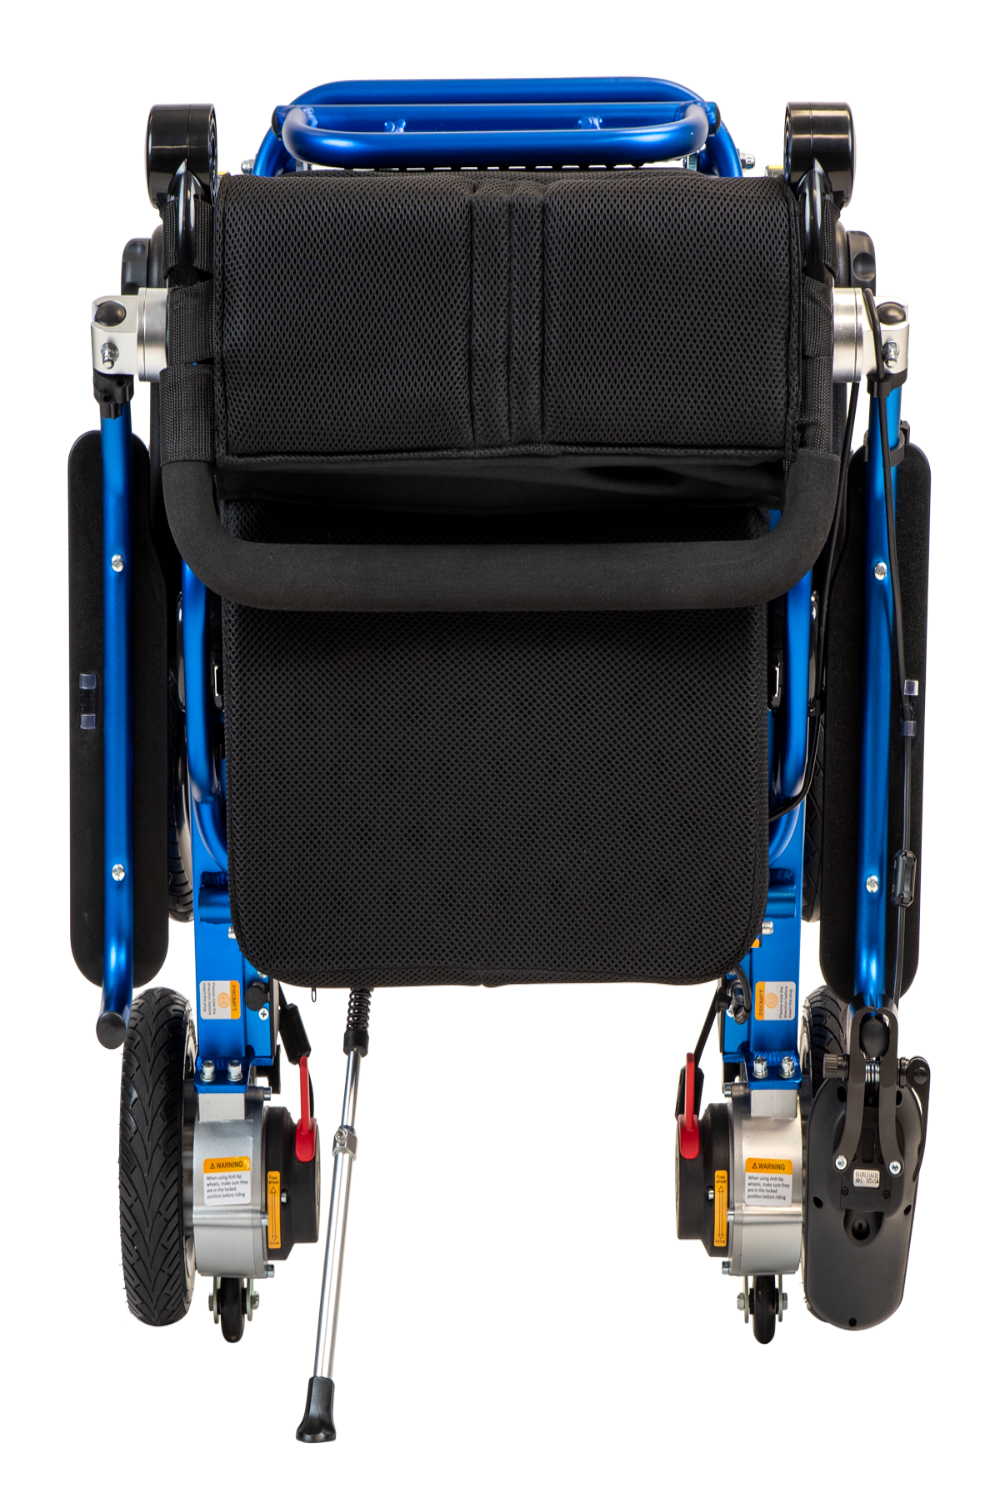 ELECTRIC WHEELSCHAIR Geo Cruiser DX Lightweight Foldable Electric Wheelchair - PureUps